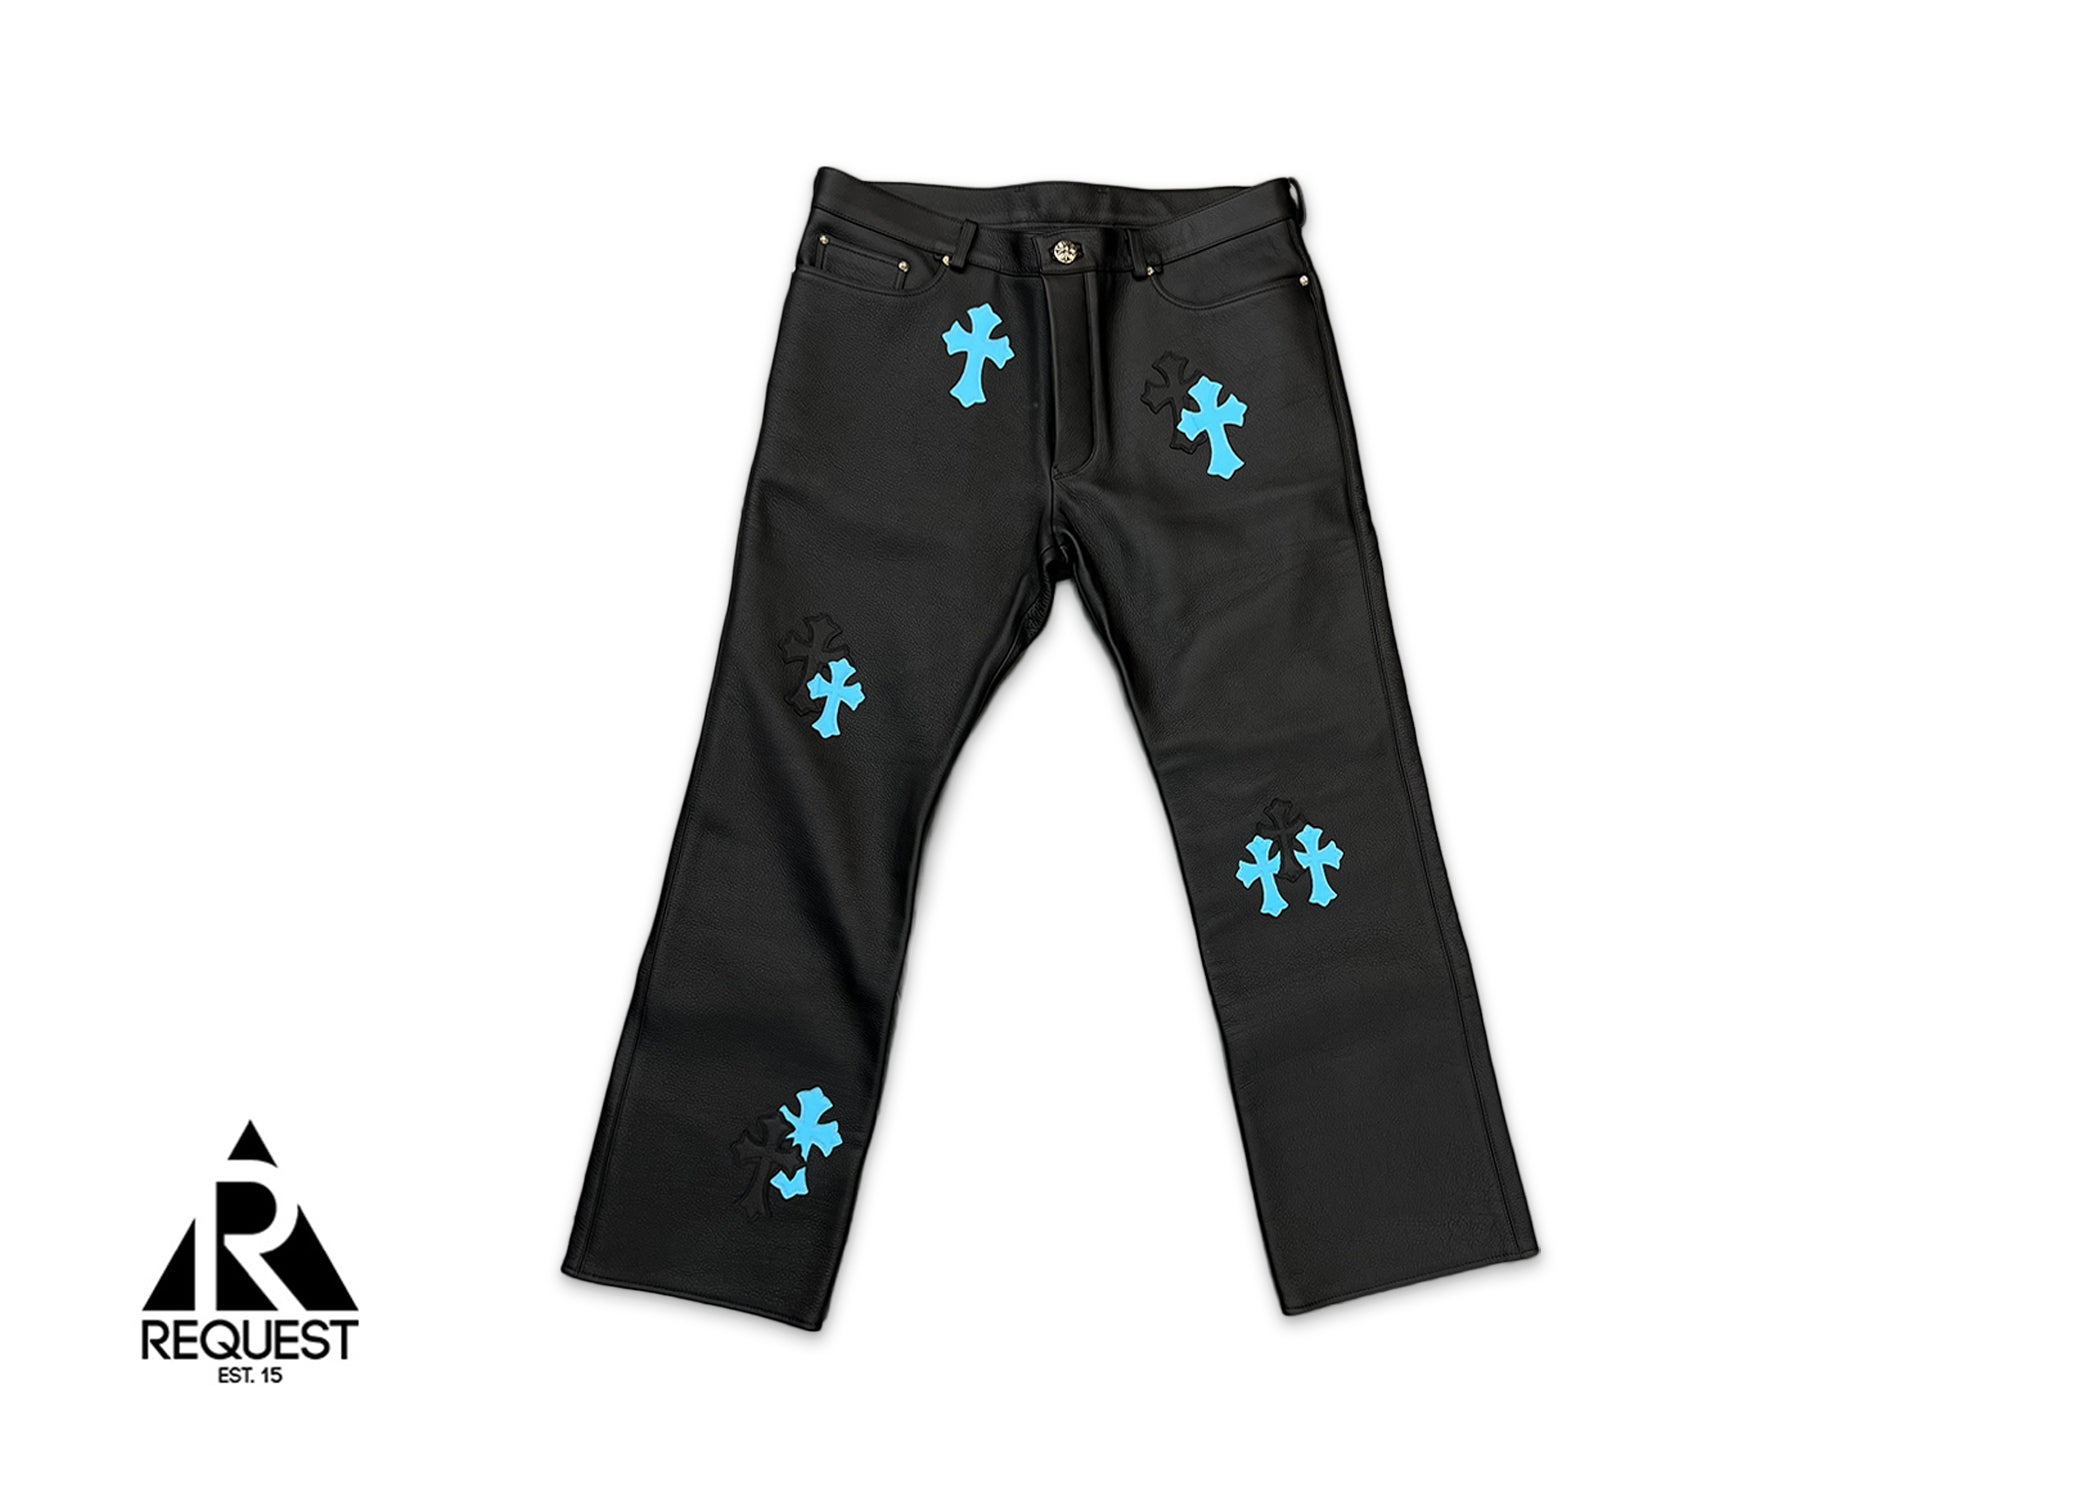 Chrome Hearts Black Leather Jeans "Black & Blue Crosses"